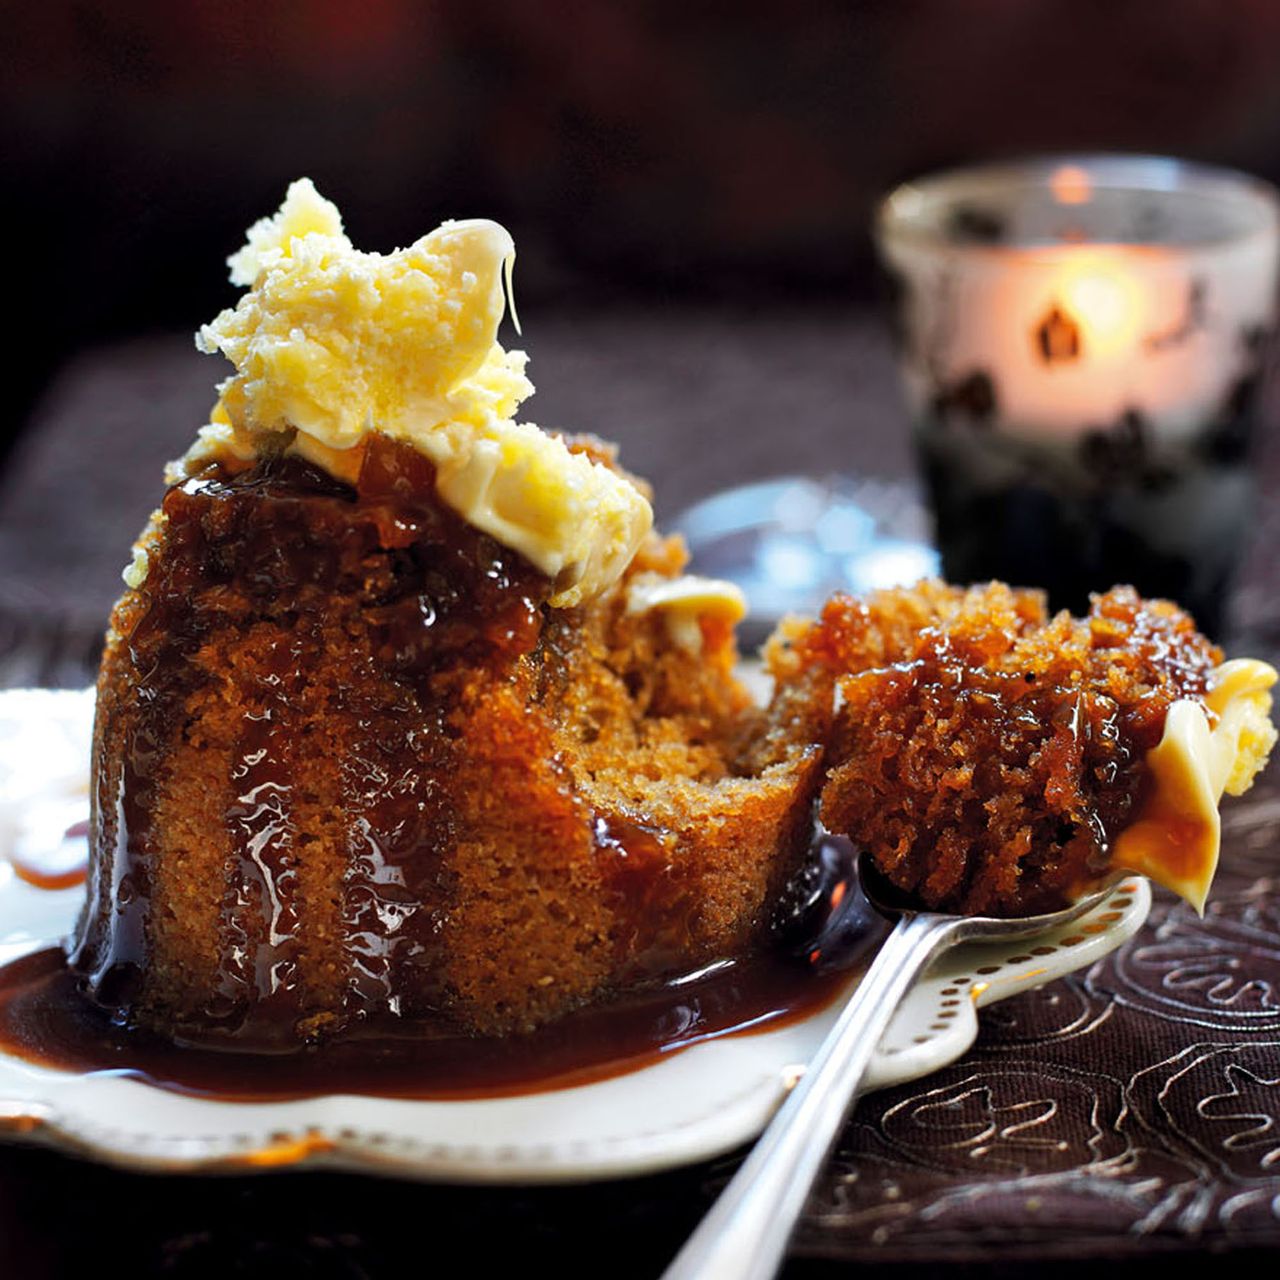 Steamed Ginger Pudding with Butterscotch Sauce | Dessert Recipes ...